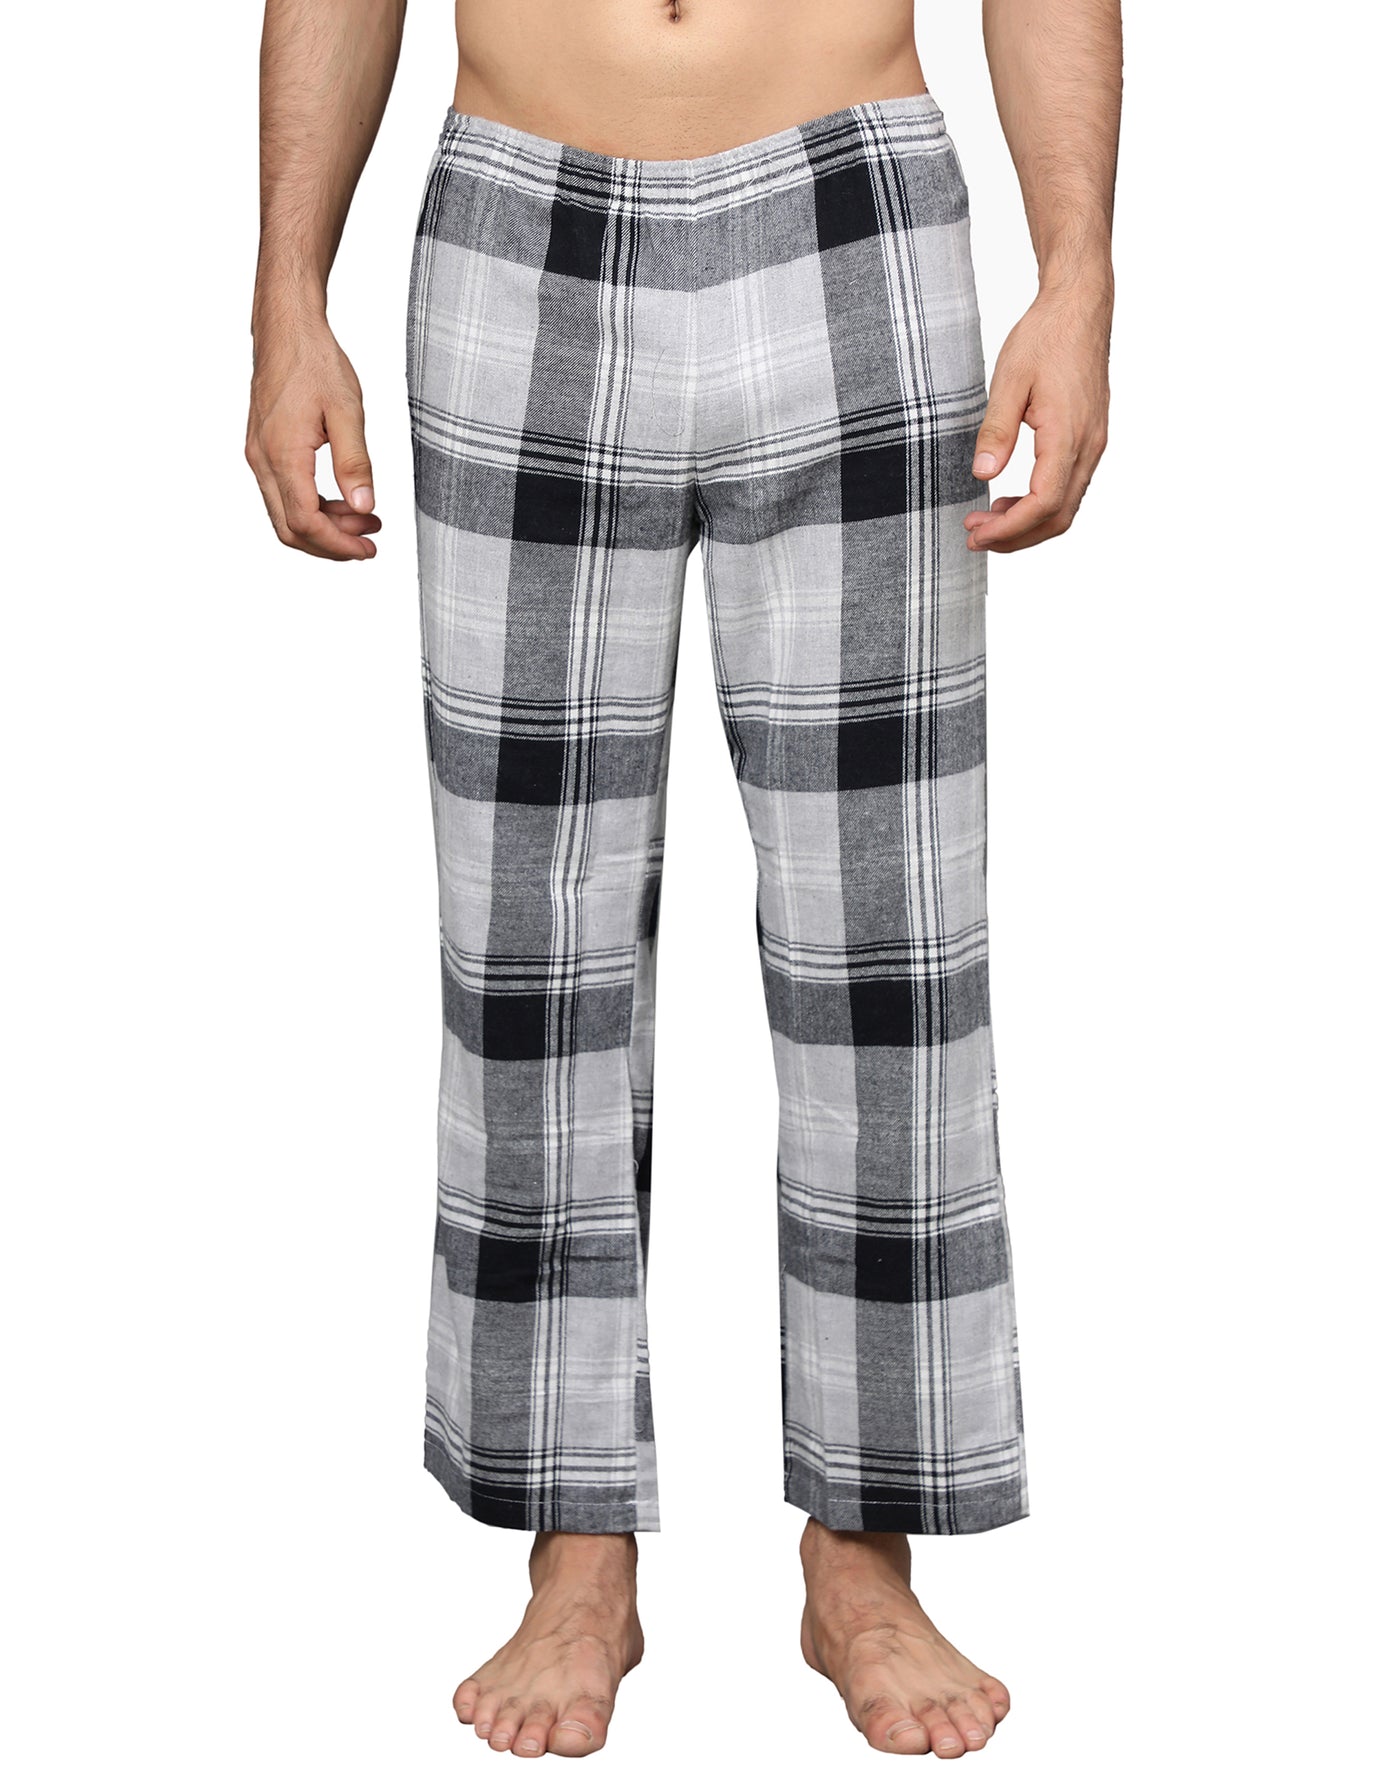 Pyjama Set for Men-Black & Grey Checked